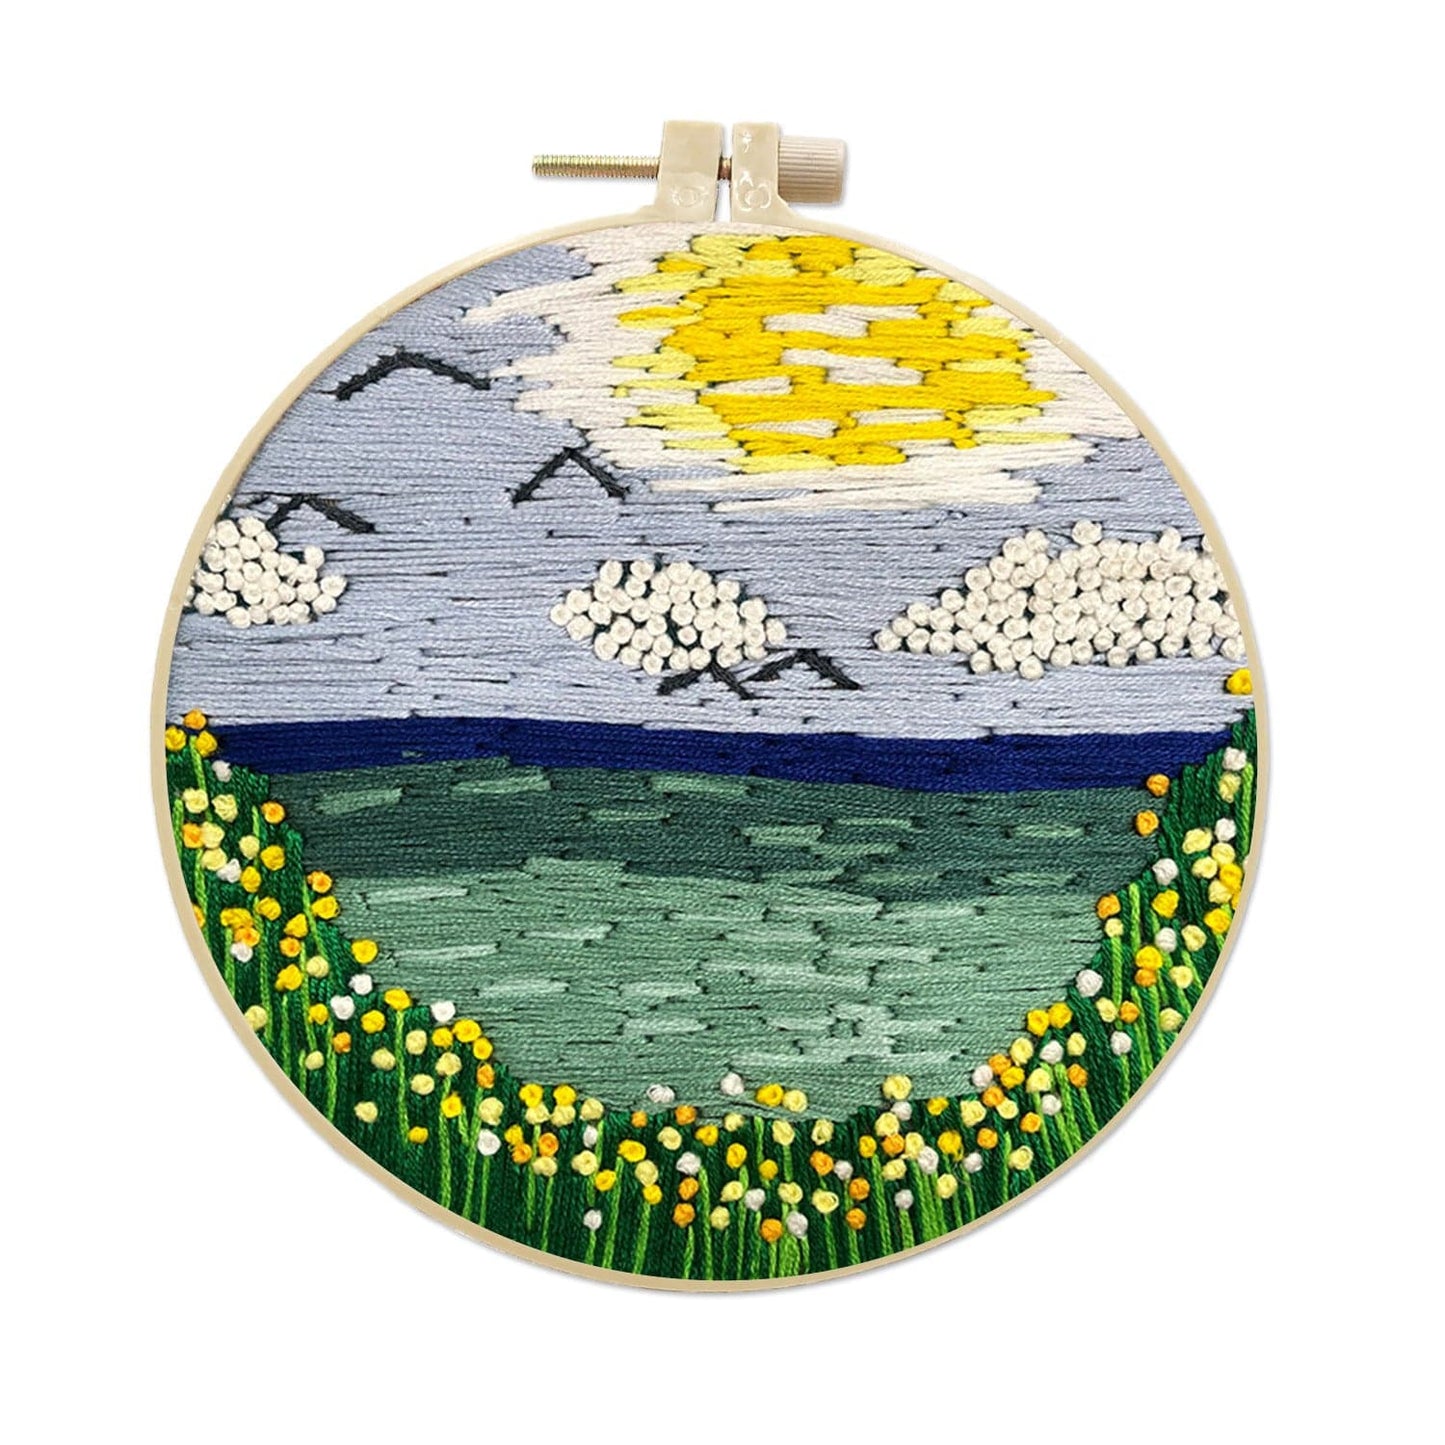 Landscape - Embroidery ktclubs.com